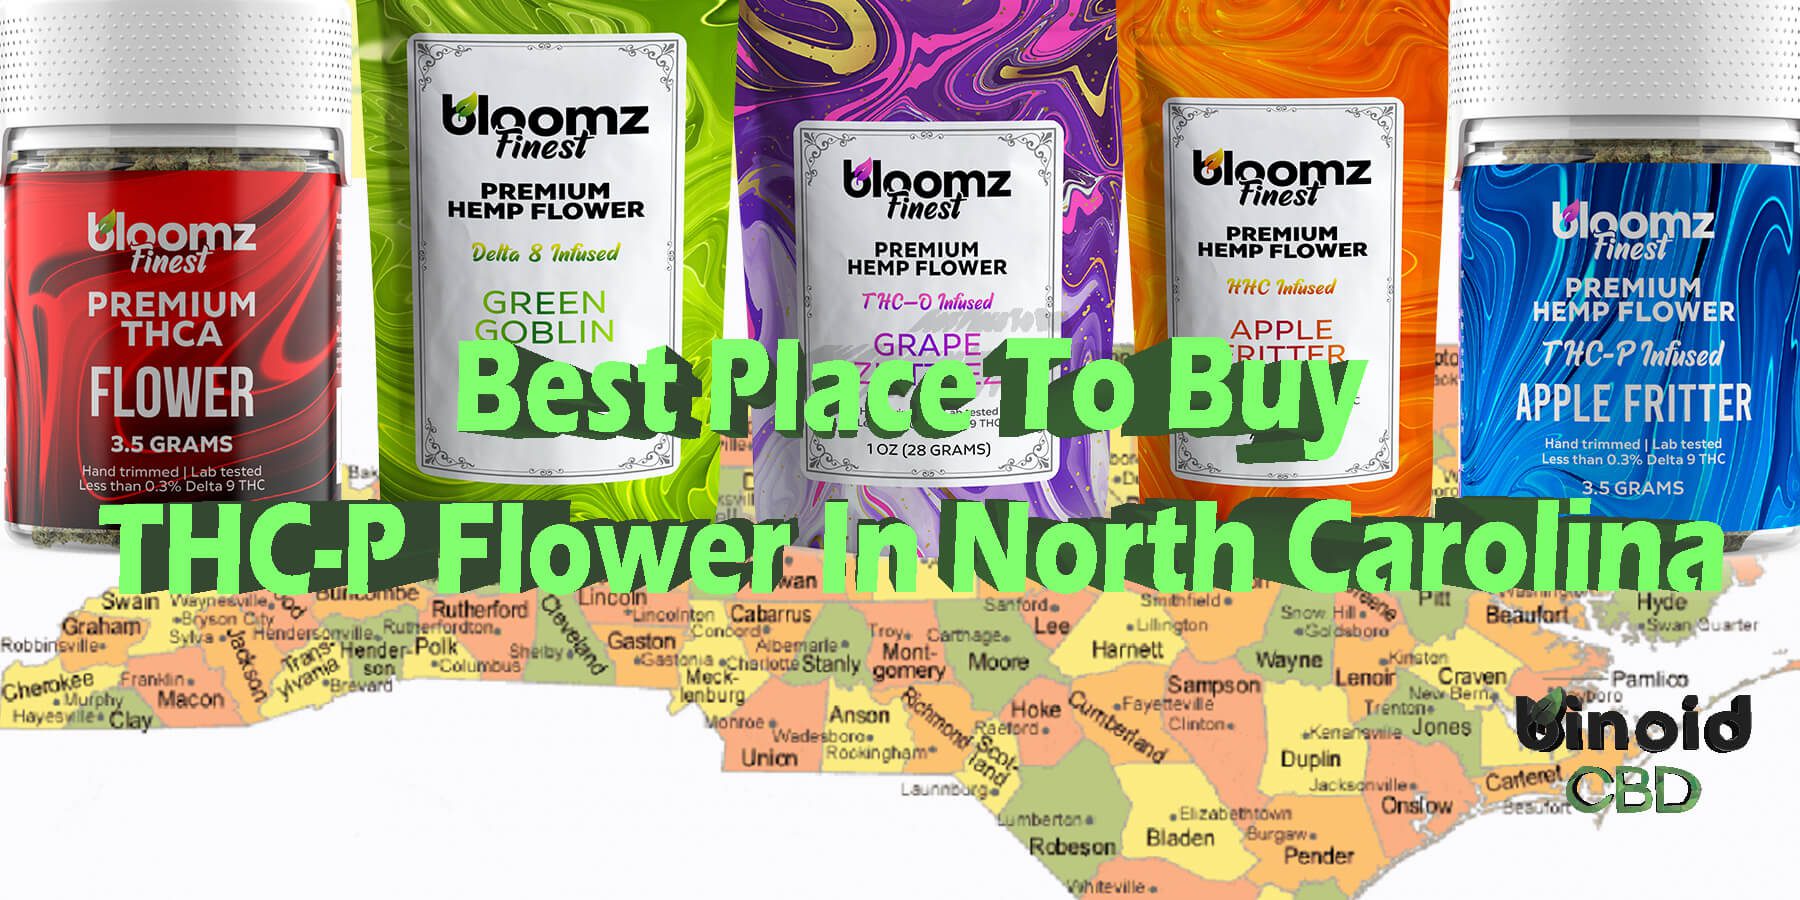 Buy THCP Flower North Carolina Get Online Near Me For Sale Best Brand Strongest Real Legal Store Shop Reddit